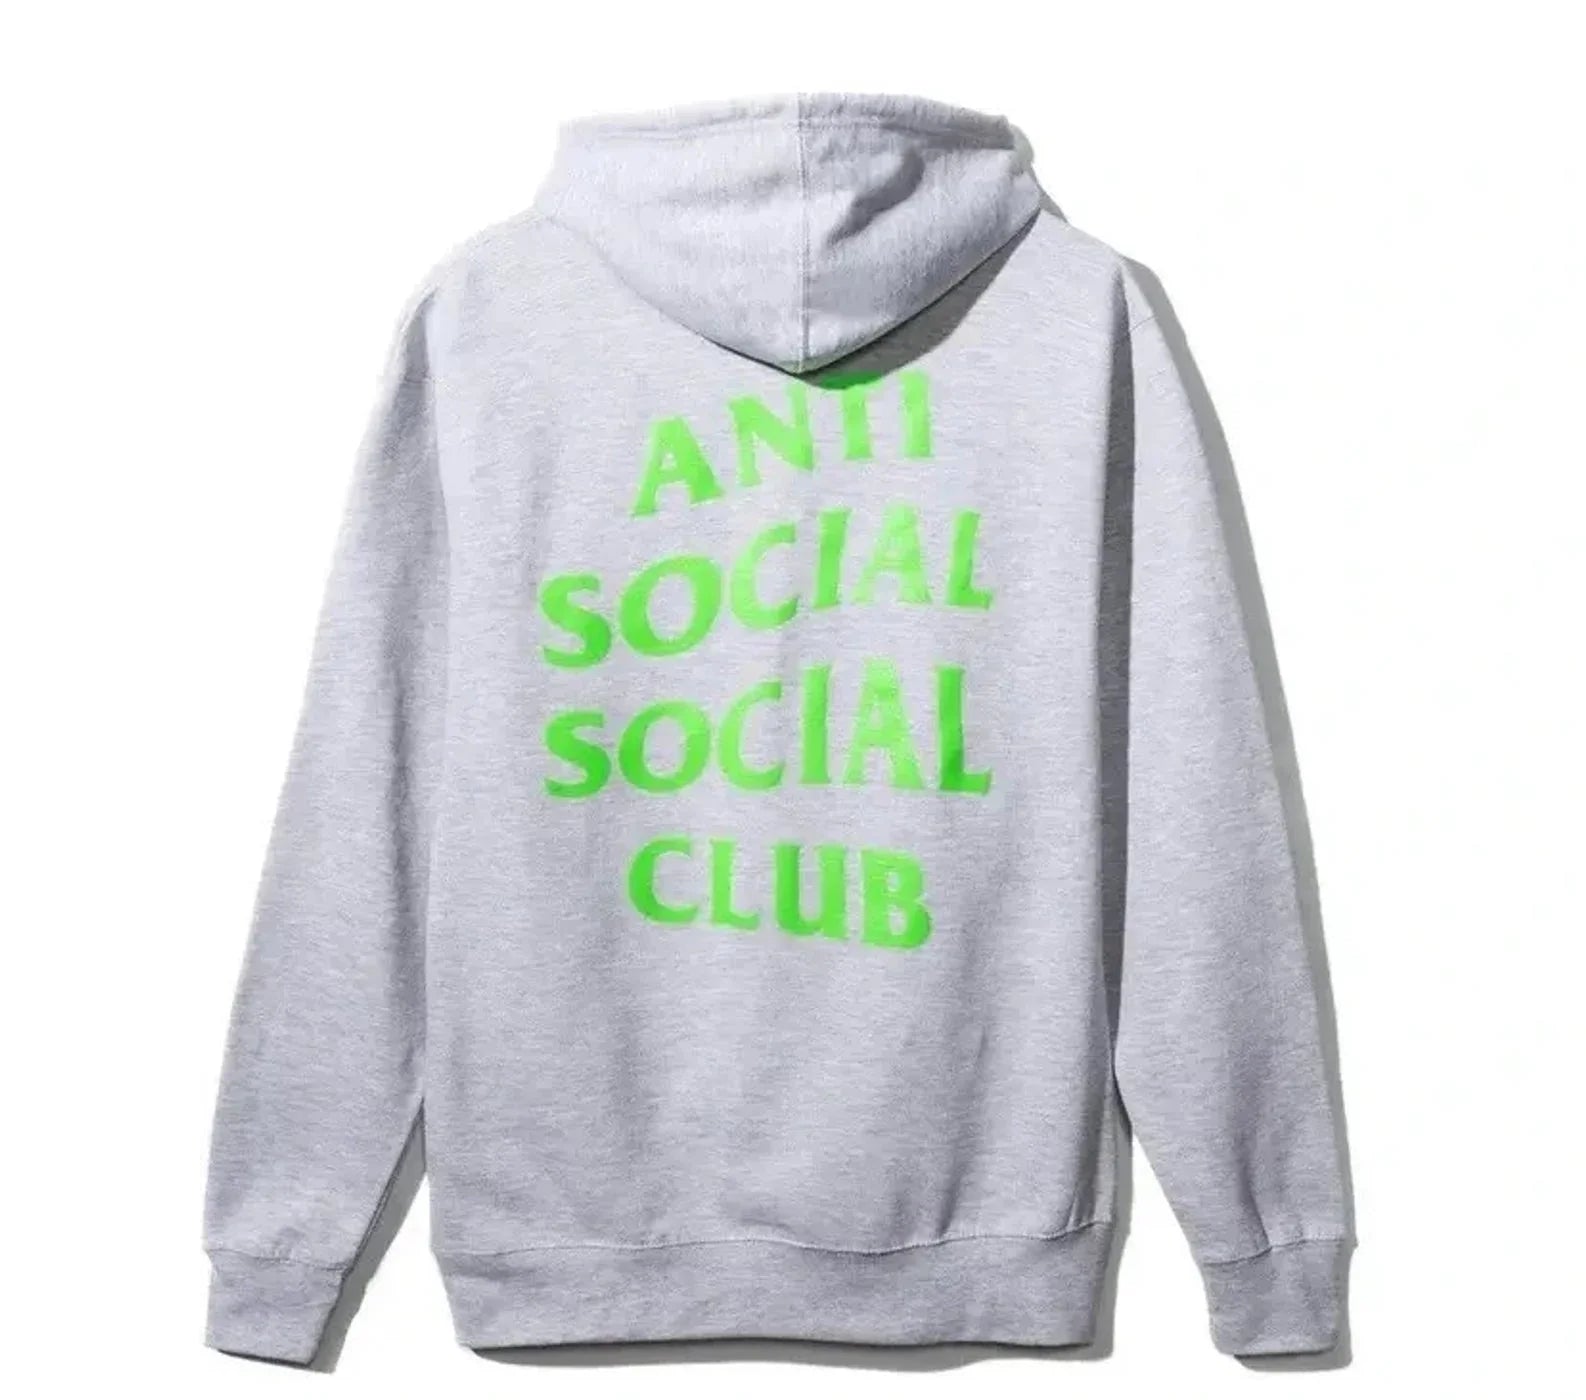 ASSC Anti Social Social Club Grey Zip Up Hoodie - Electric Green